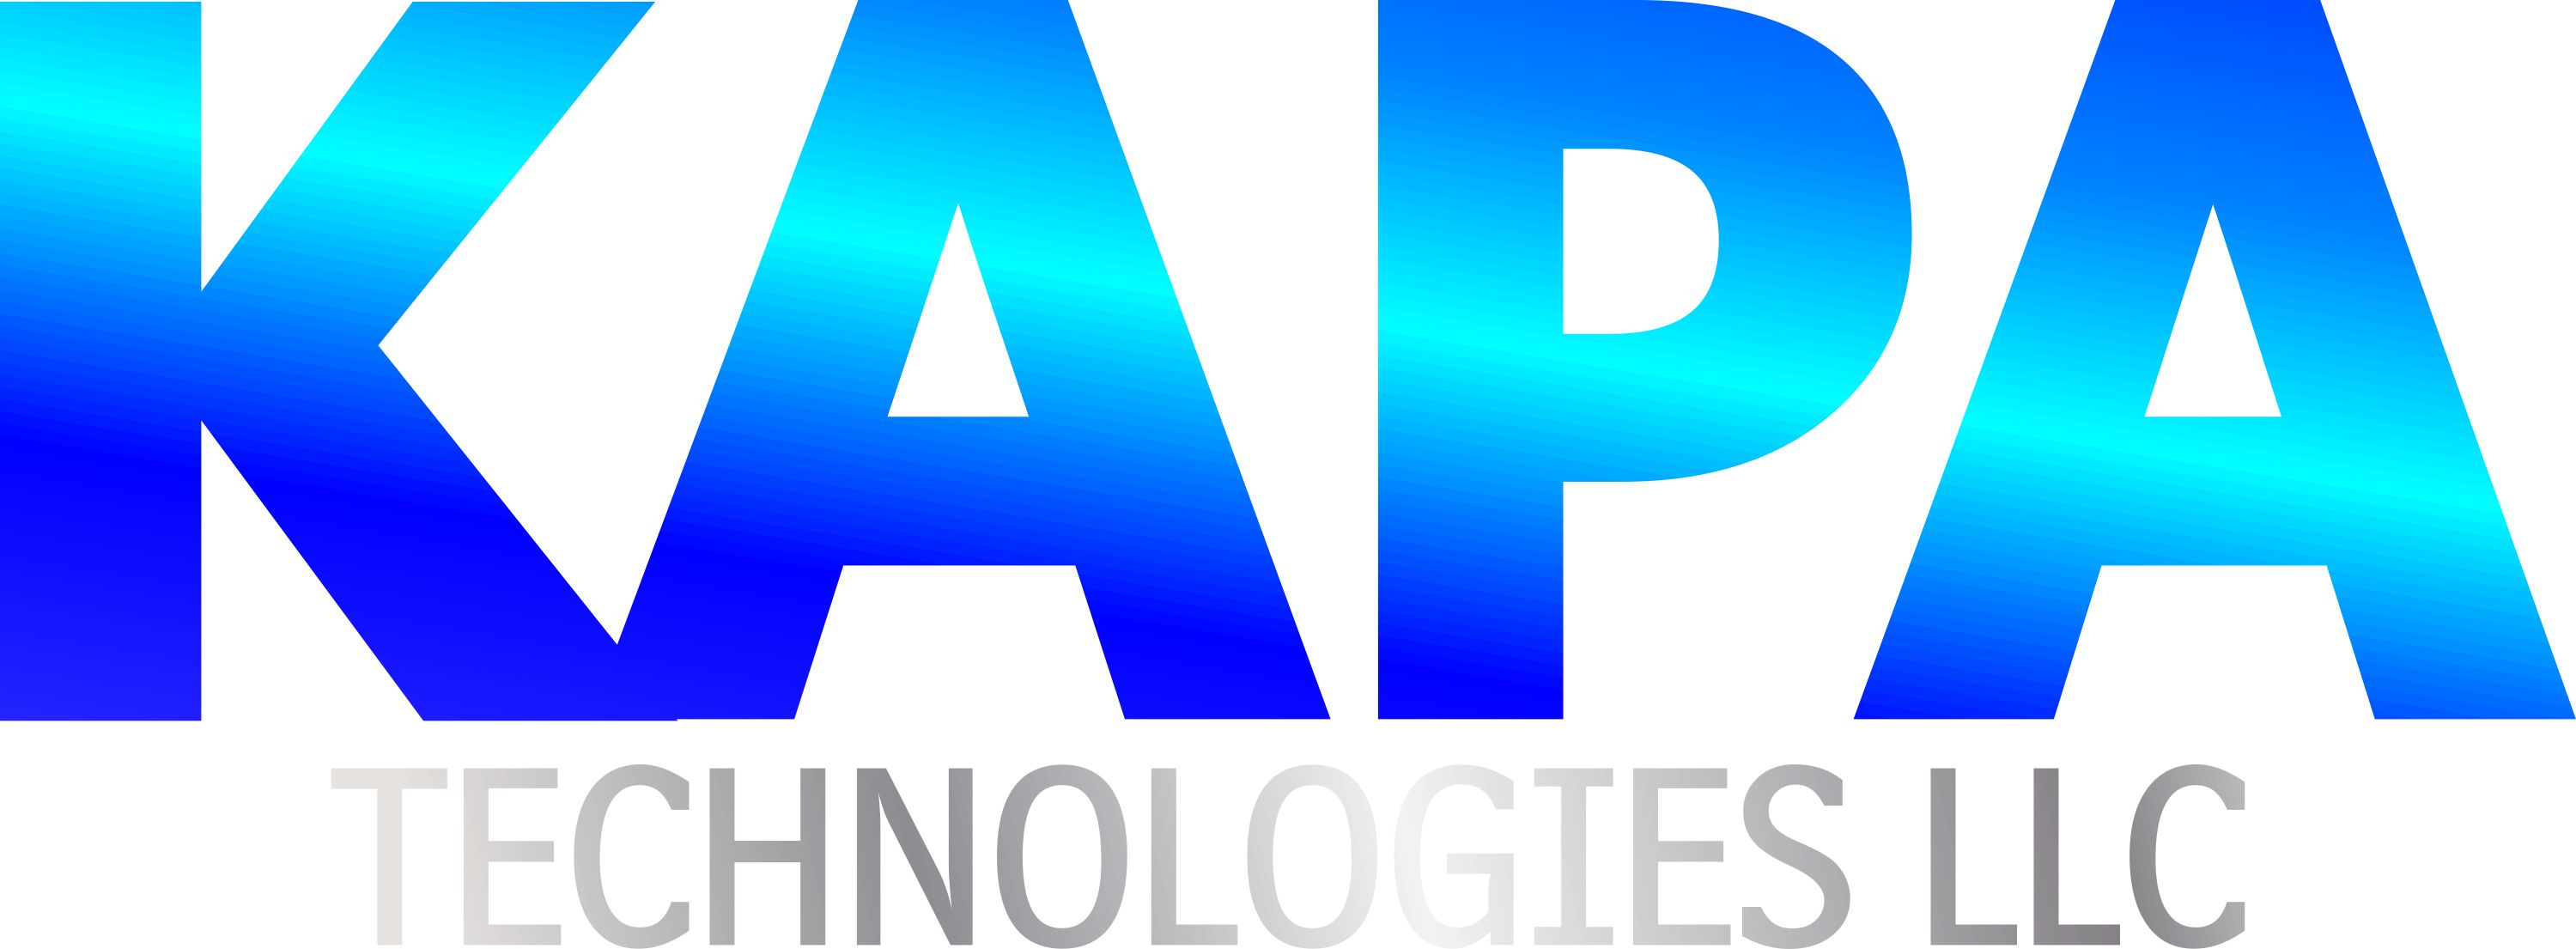 Kapa Technologies